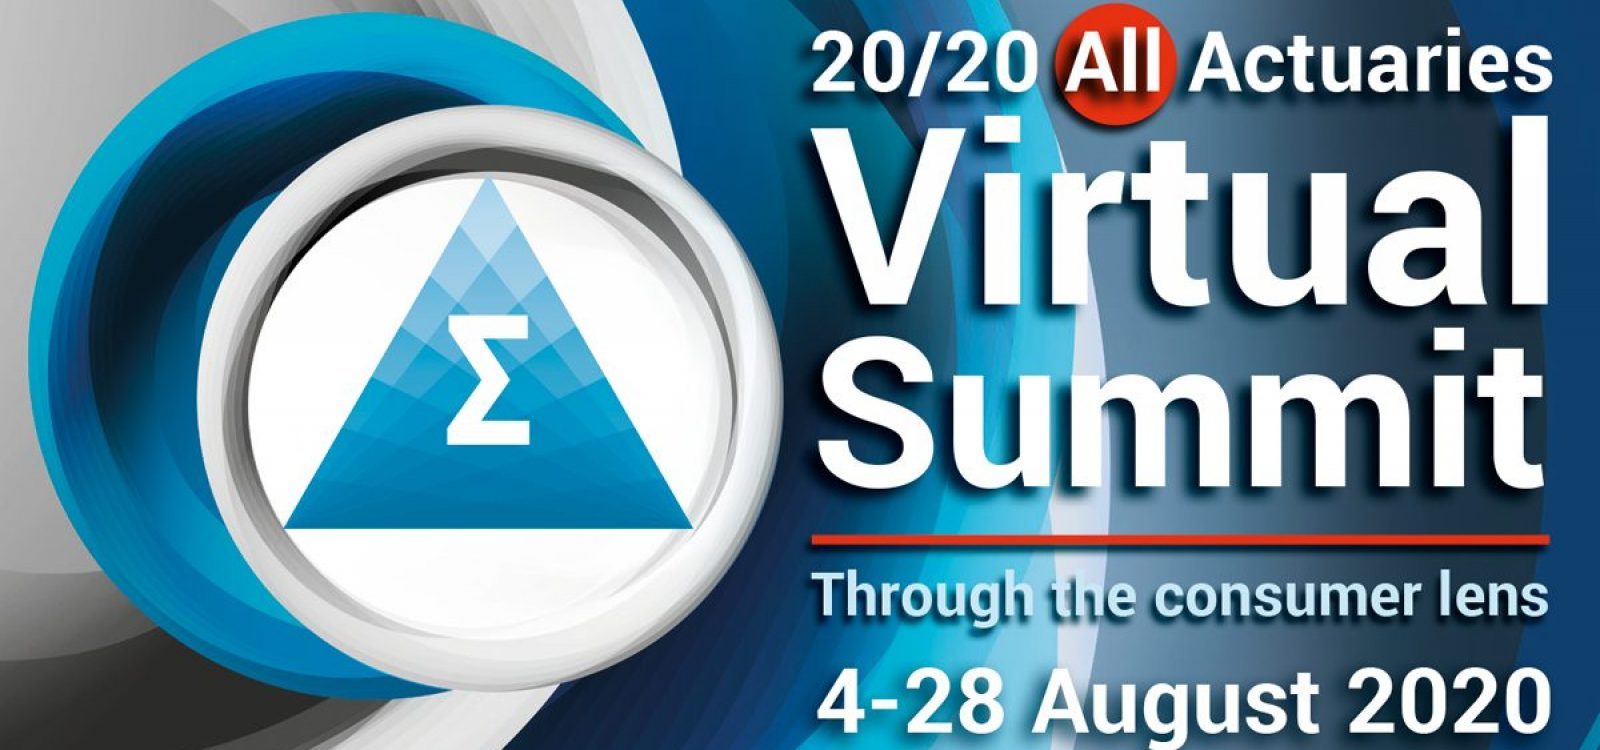 Flagship Actuaries Summit goes virtual